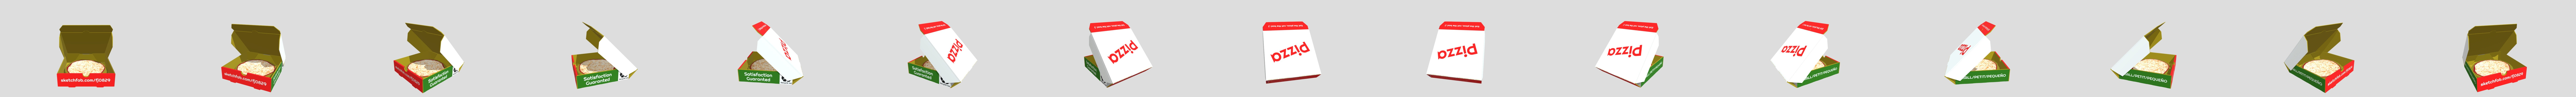 2,942 Pizza Box Texture Images, Stock Photos, 3D objects, & Vectors